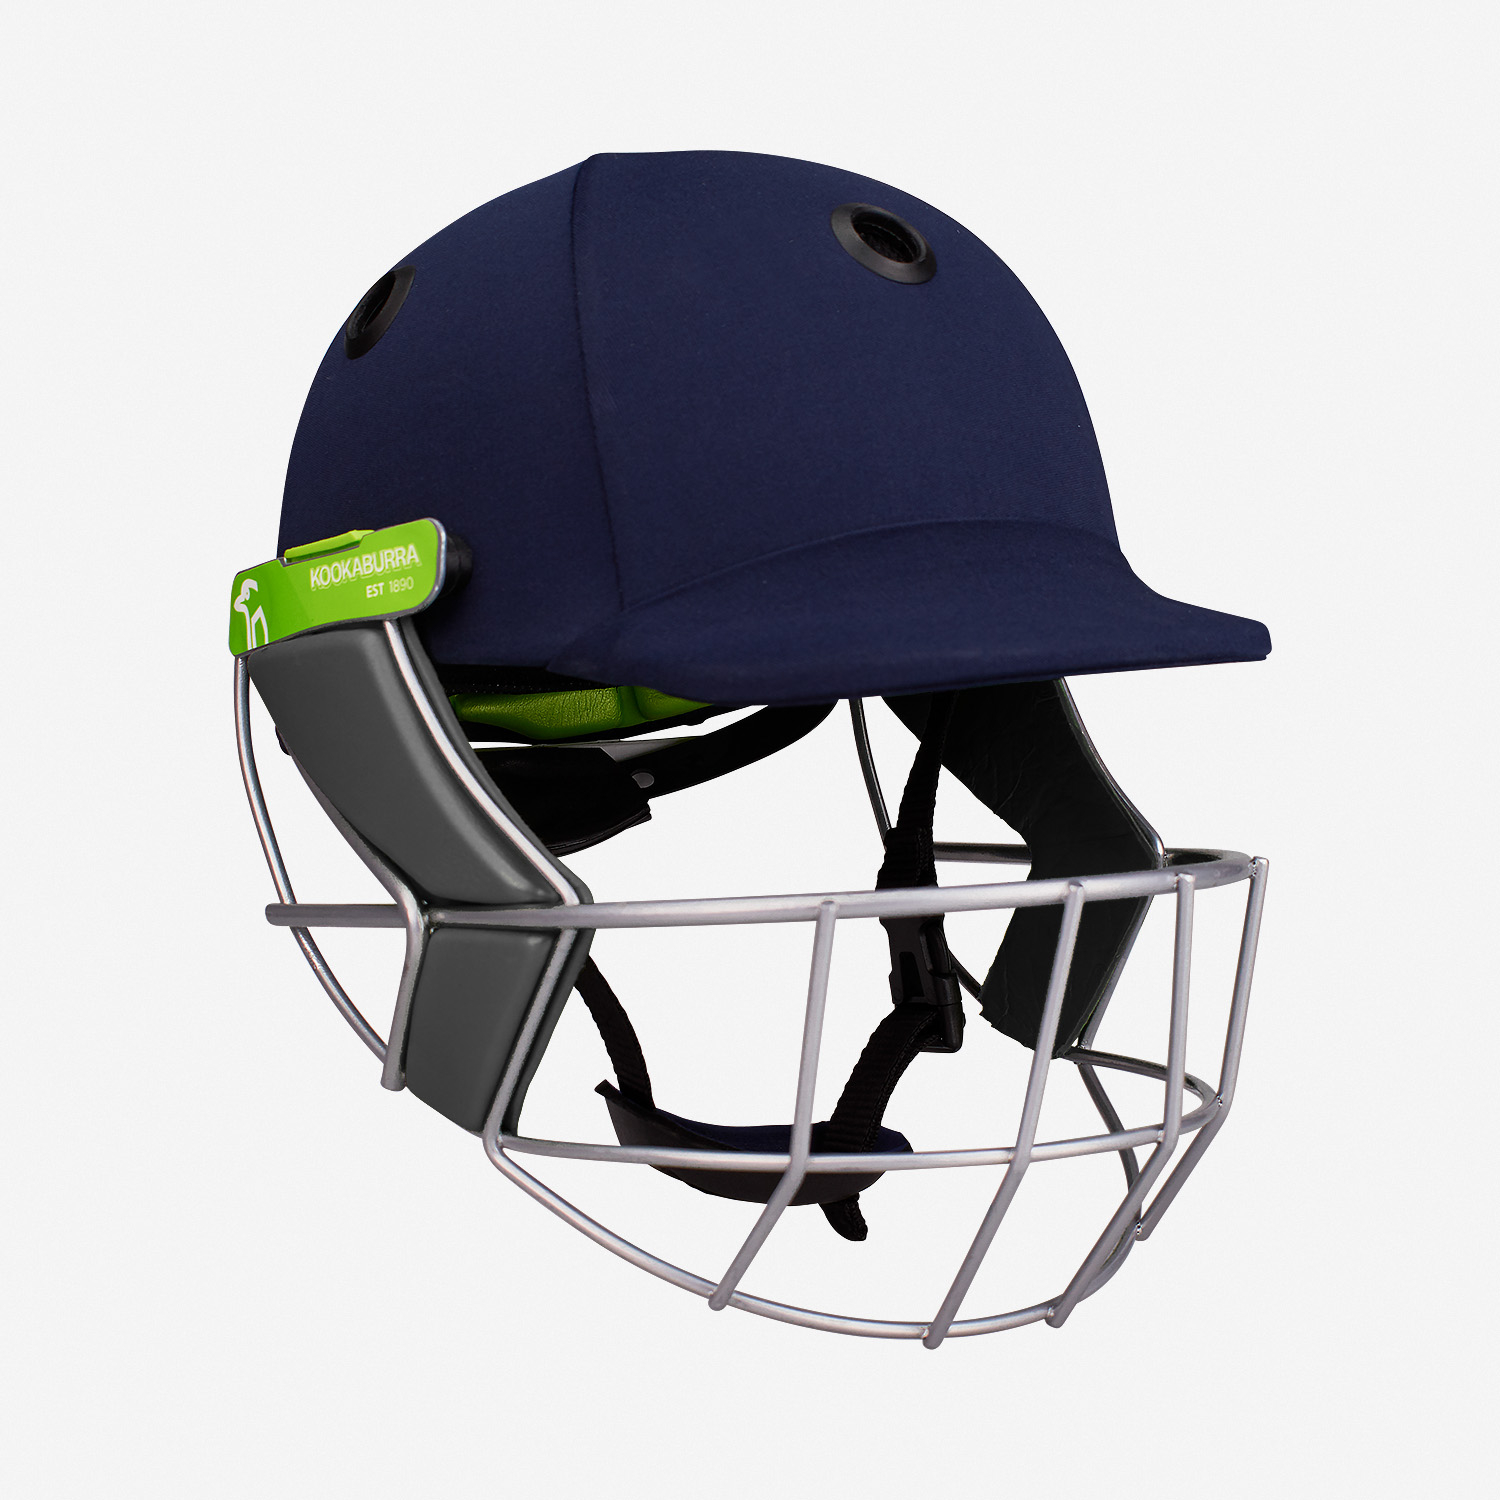 Kookaburra 1200 Cricket Helmet